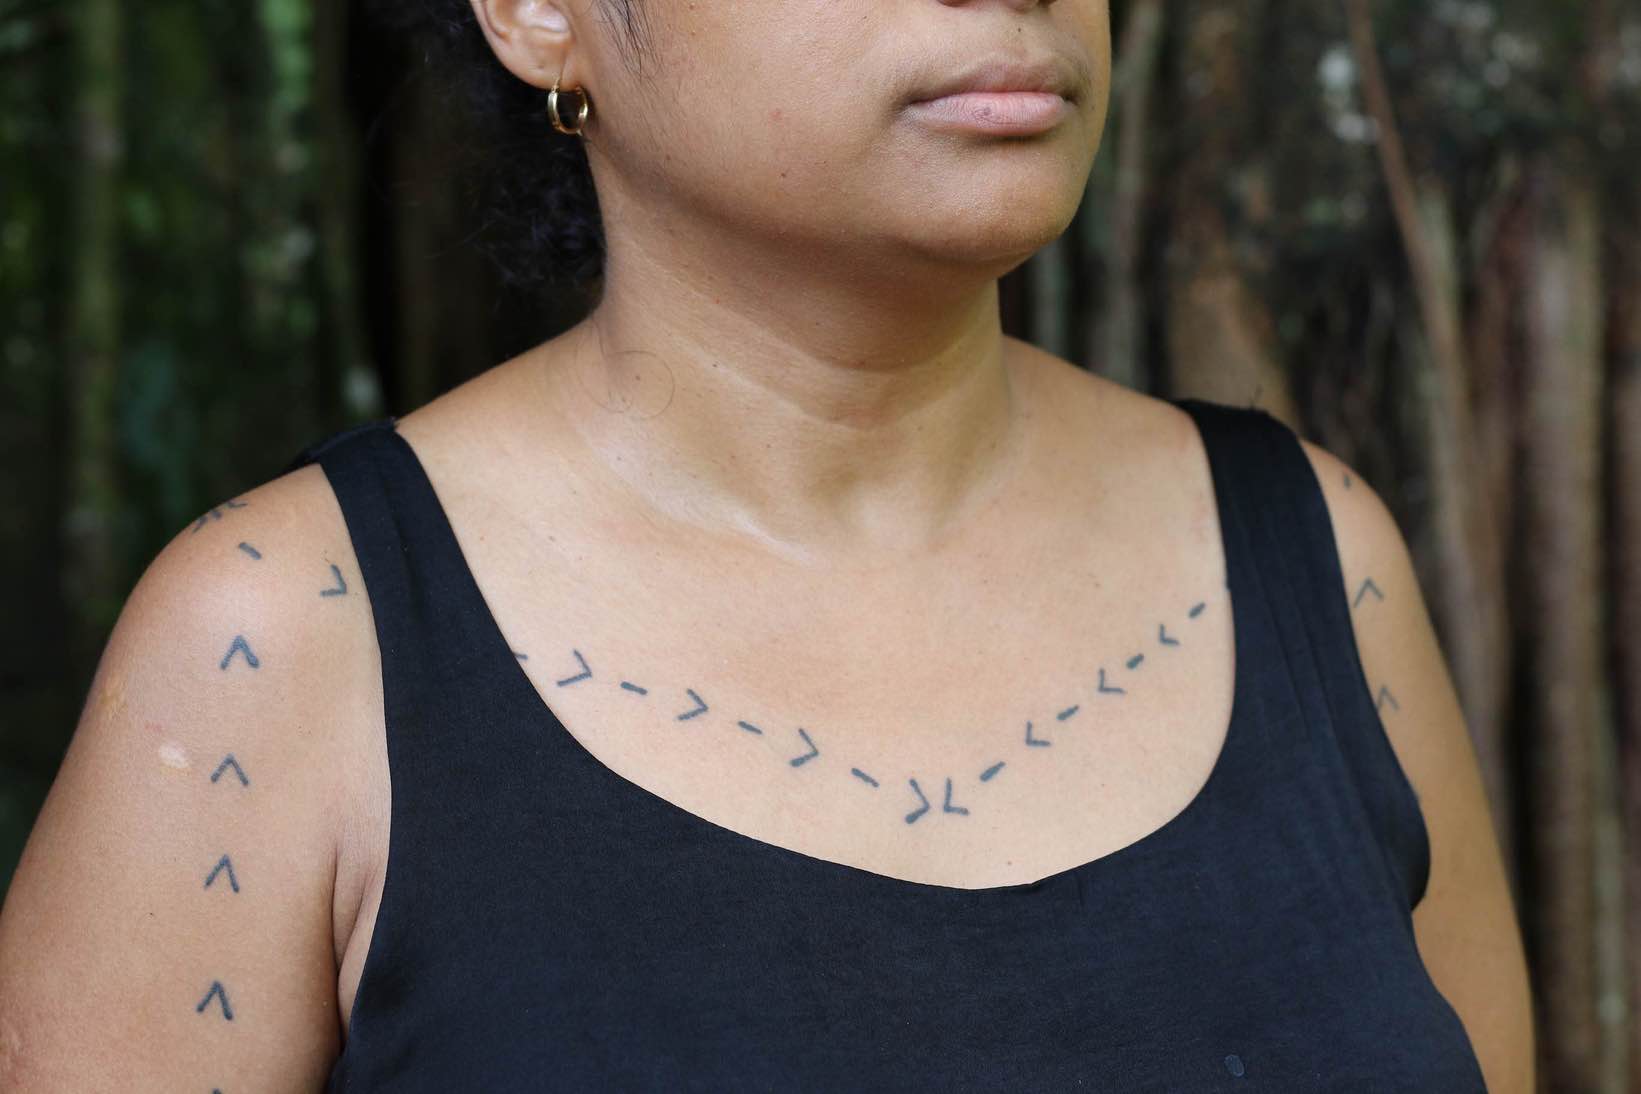 Tahitian Tattoo Symbols And Meanings: Explain!